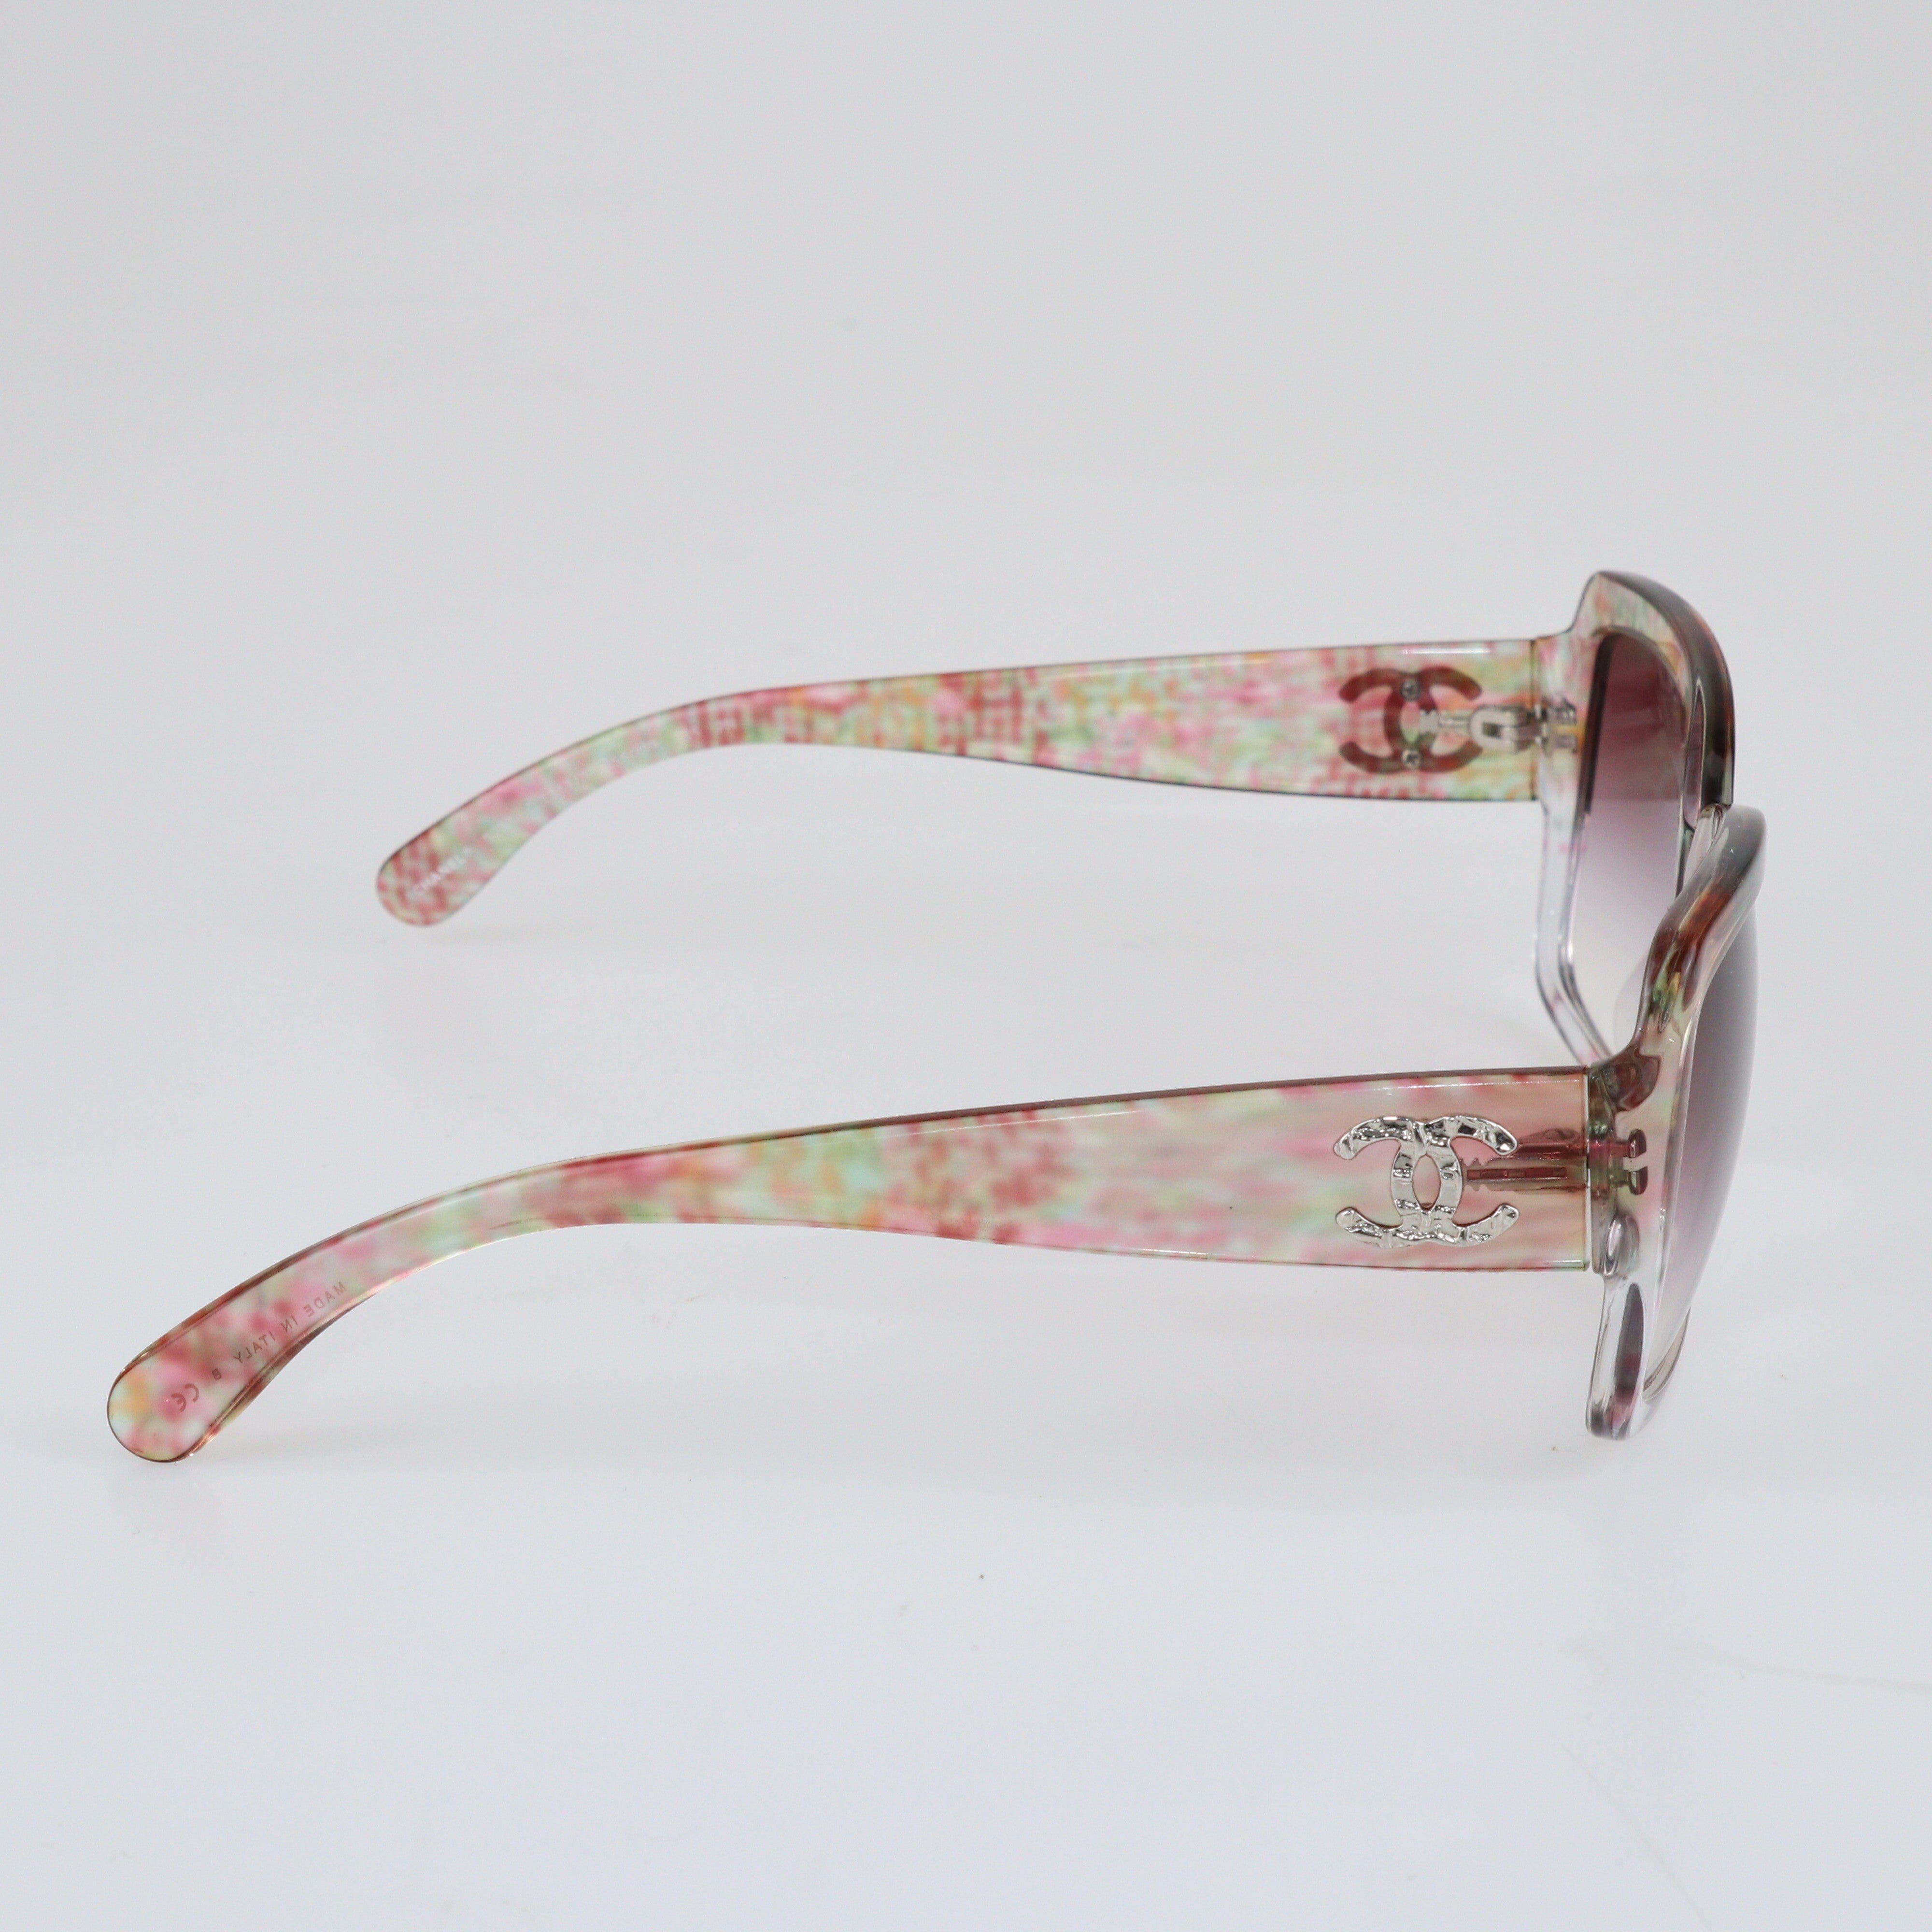 Multicolore Tweed Print Gradient Tint Sunglasses Accessories Chanel 